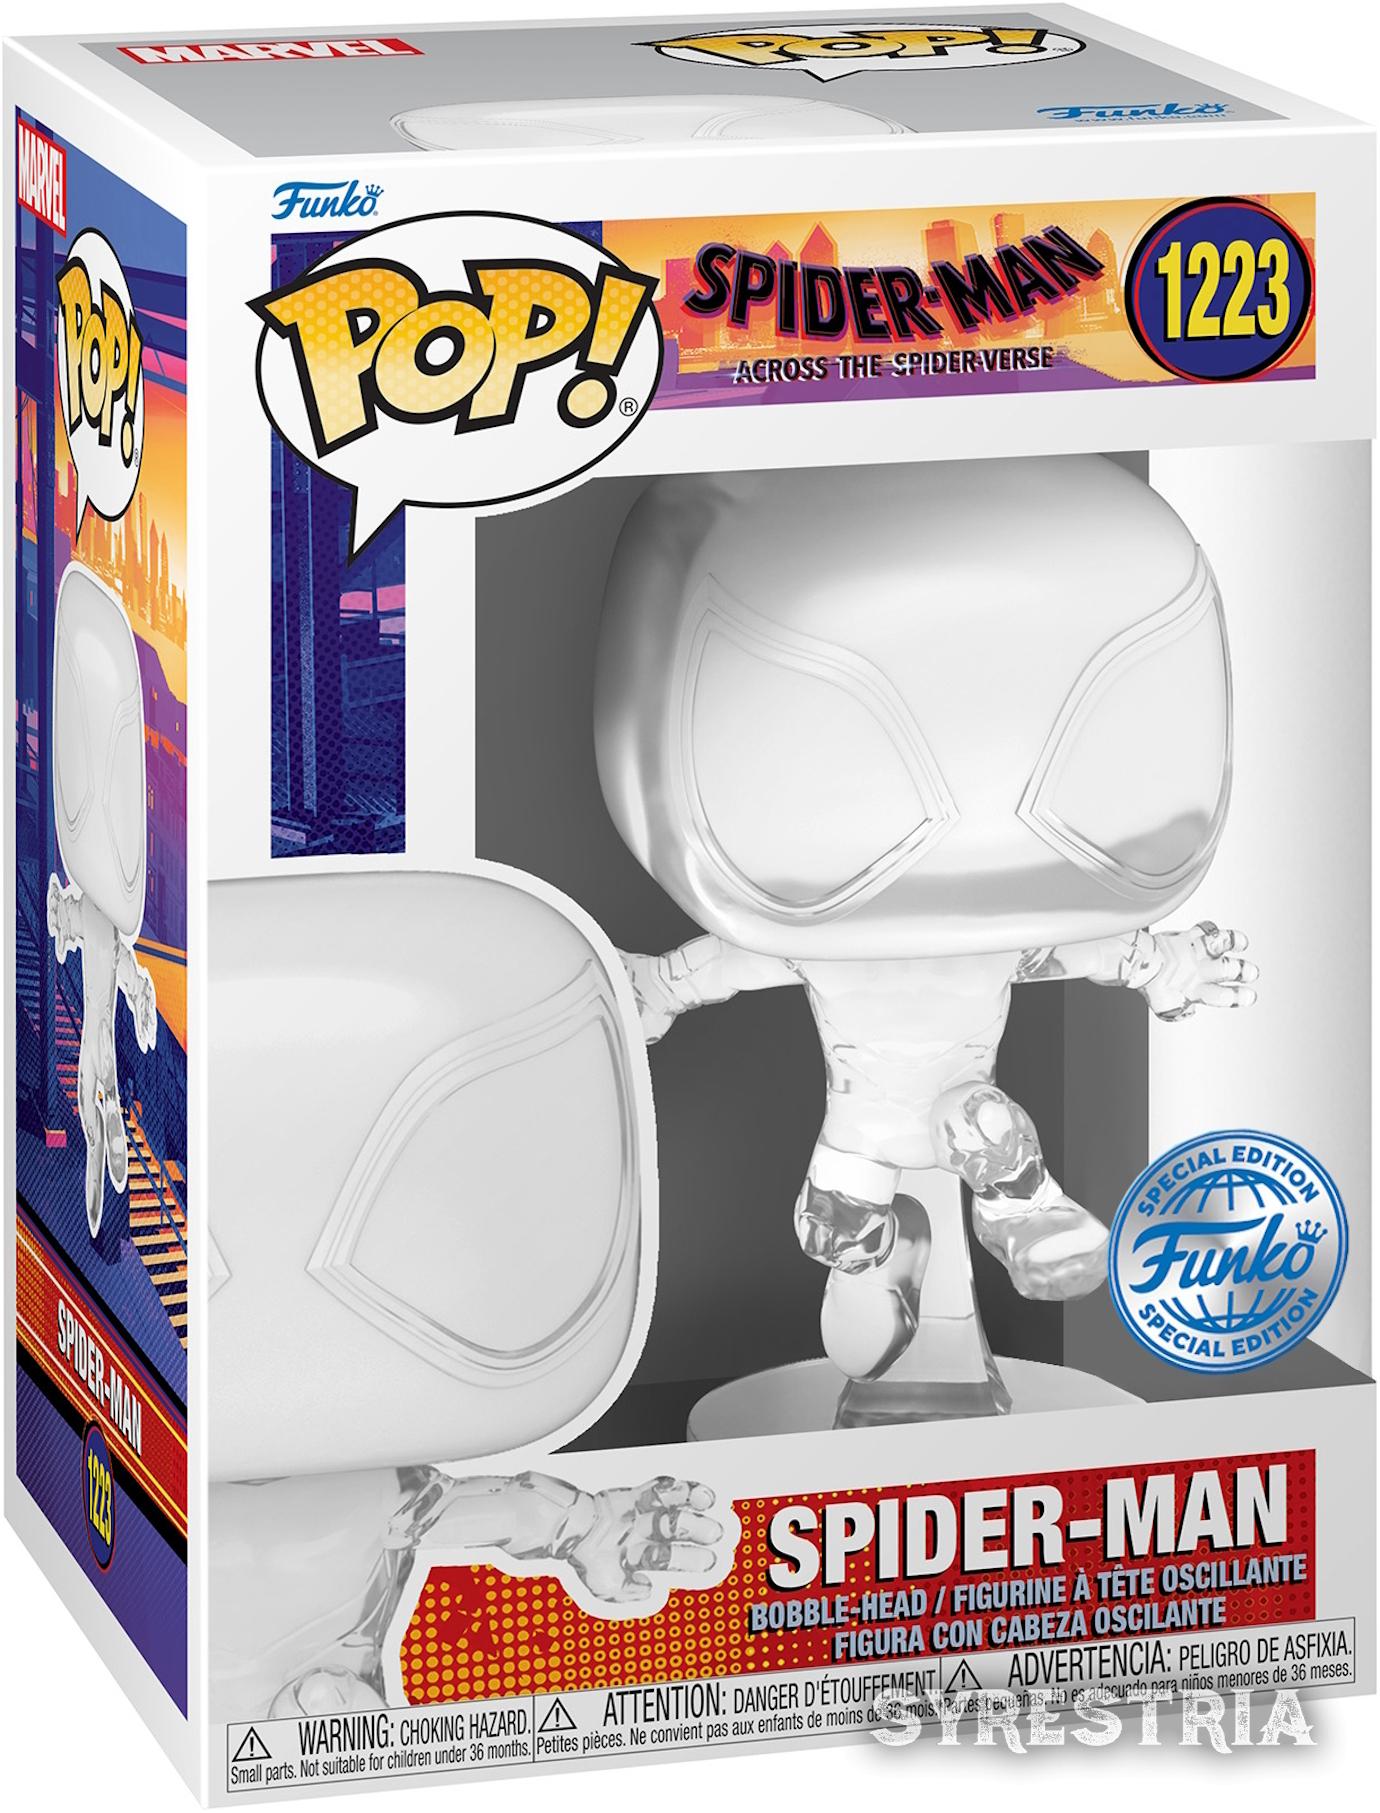 Spider Man Across the Spiderverse 1223  Special Edition - Funko Pop! Vinyl Figur